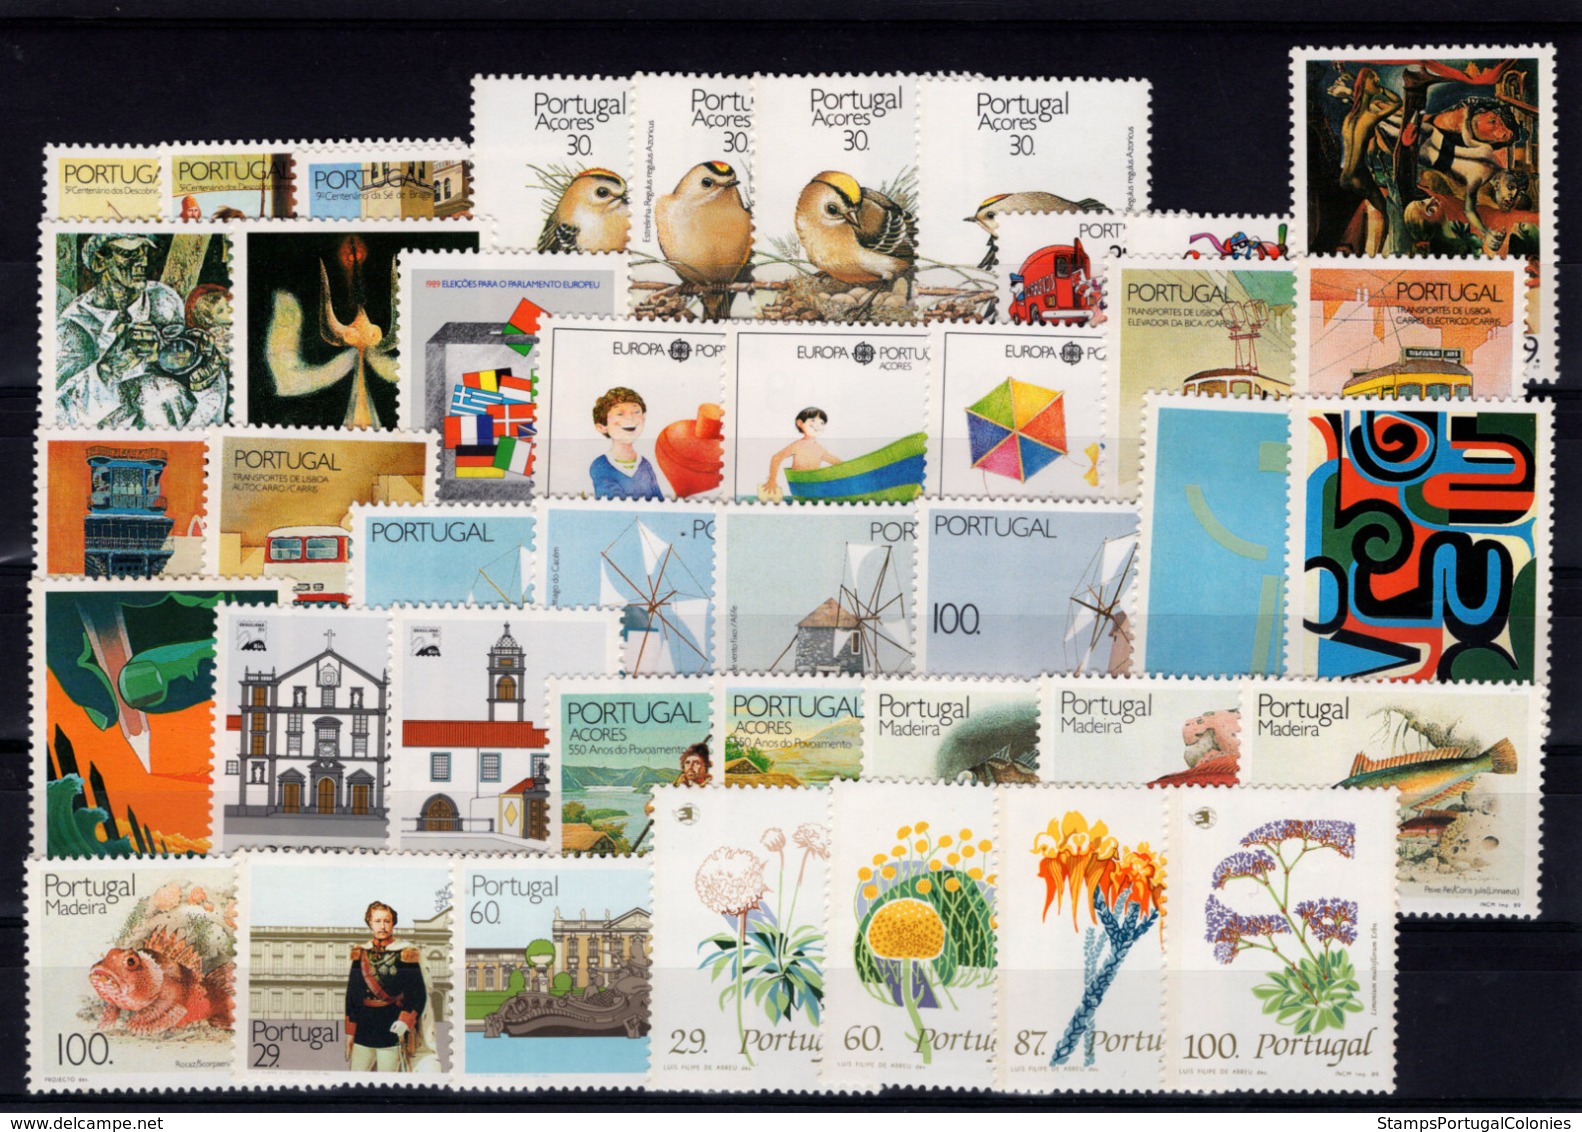 1989 Portugal Azores Madeira Complete Year MNH Stamps. Année Compléte NeufSansCharnière. Ano Completo Novo Sem Charneira - Années Complètes